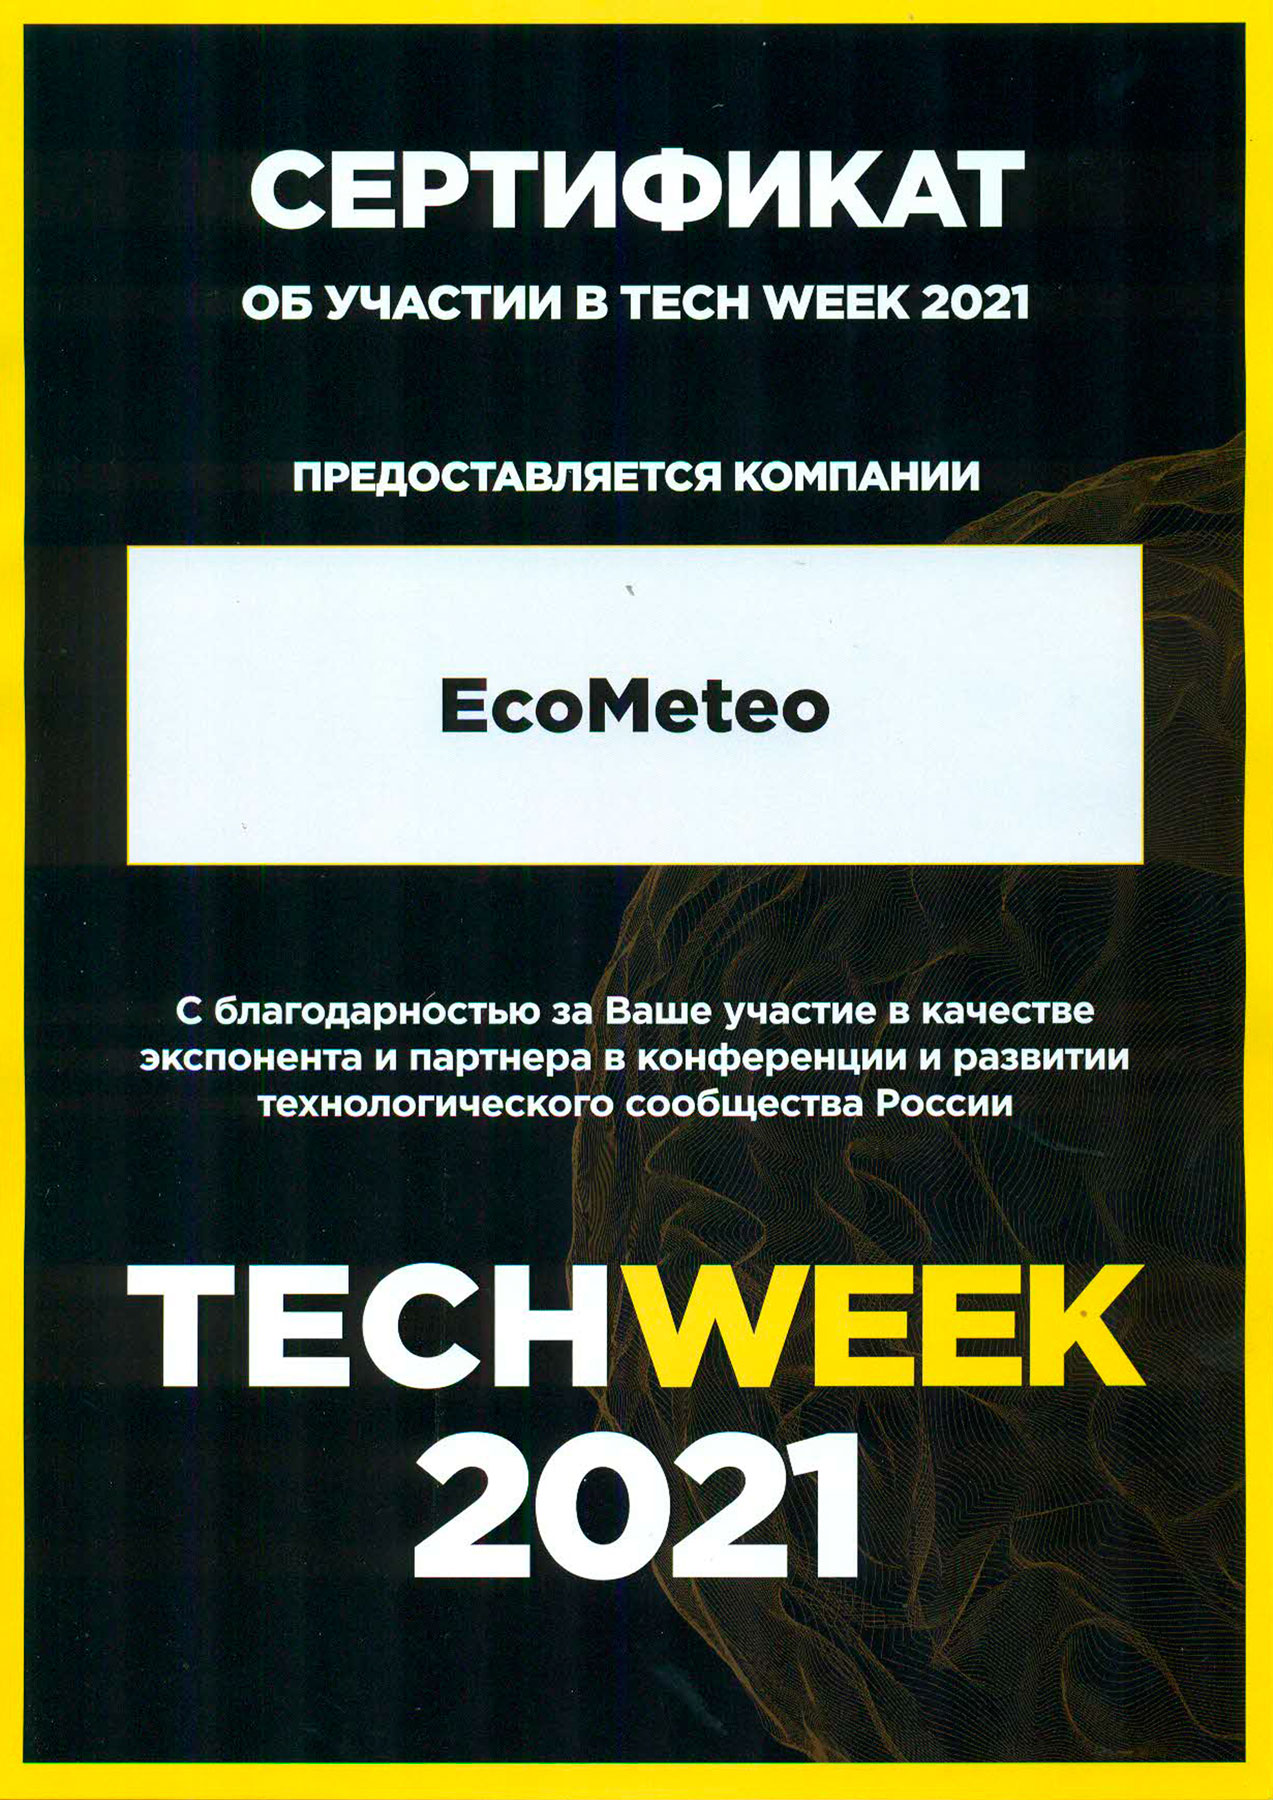 Сертификат Techweek 2021 Ecometeo